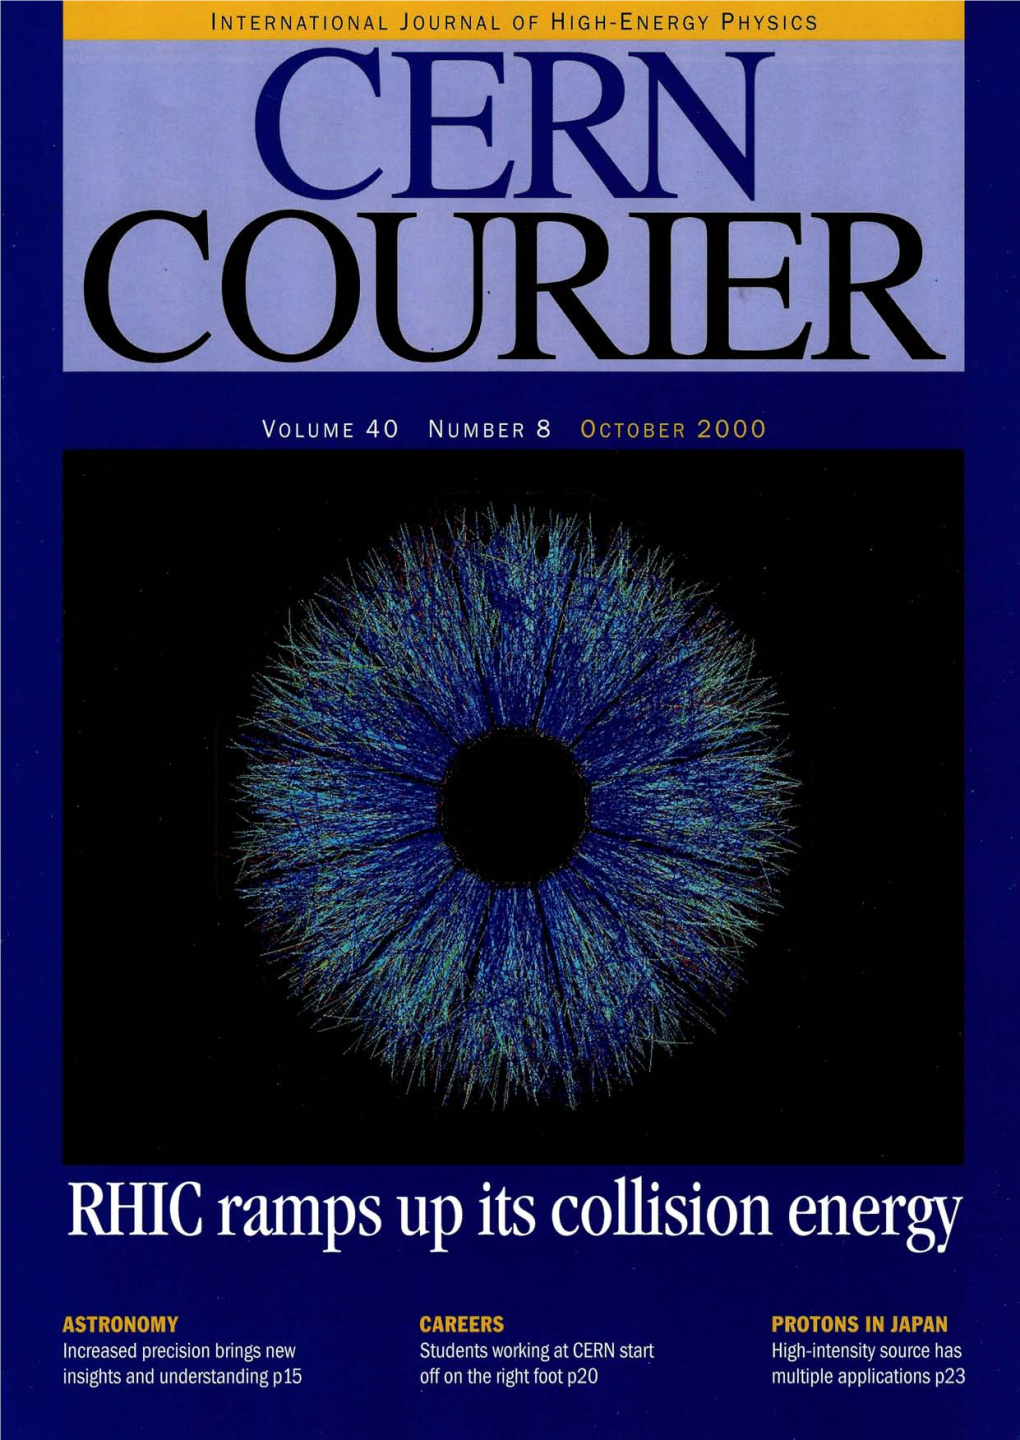 R^ Ix I XI COURIER VOLUME 40 NUMBER 8 OCTOBER 2000